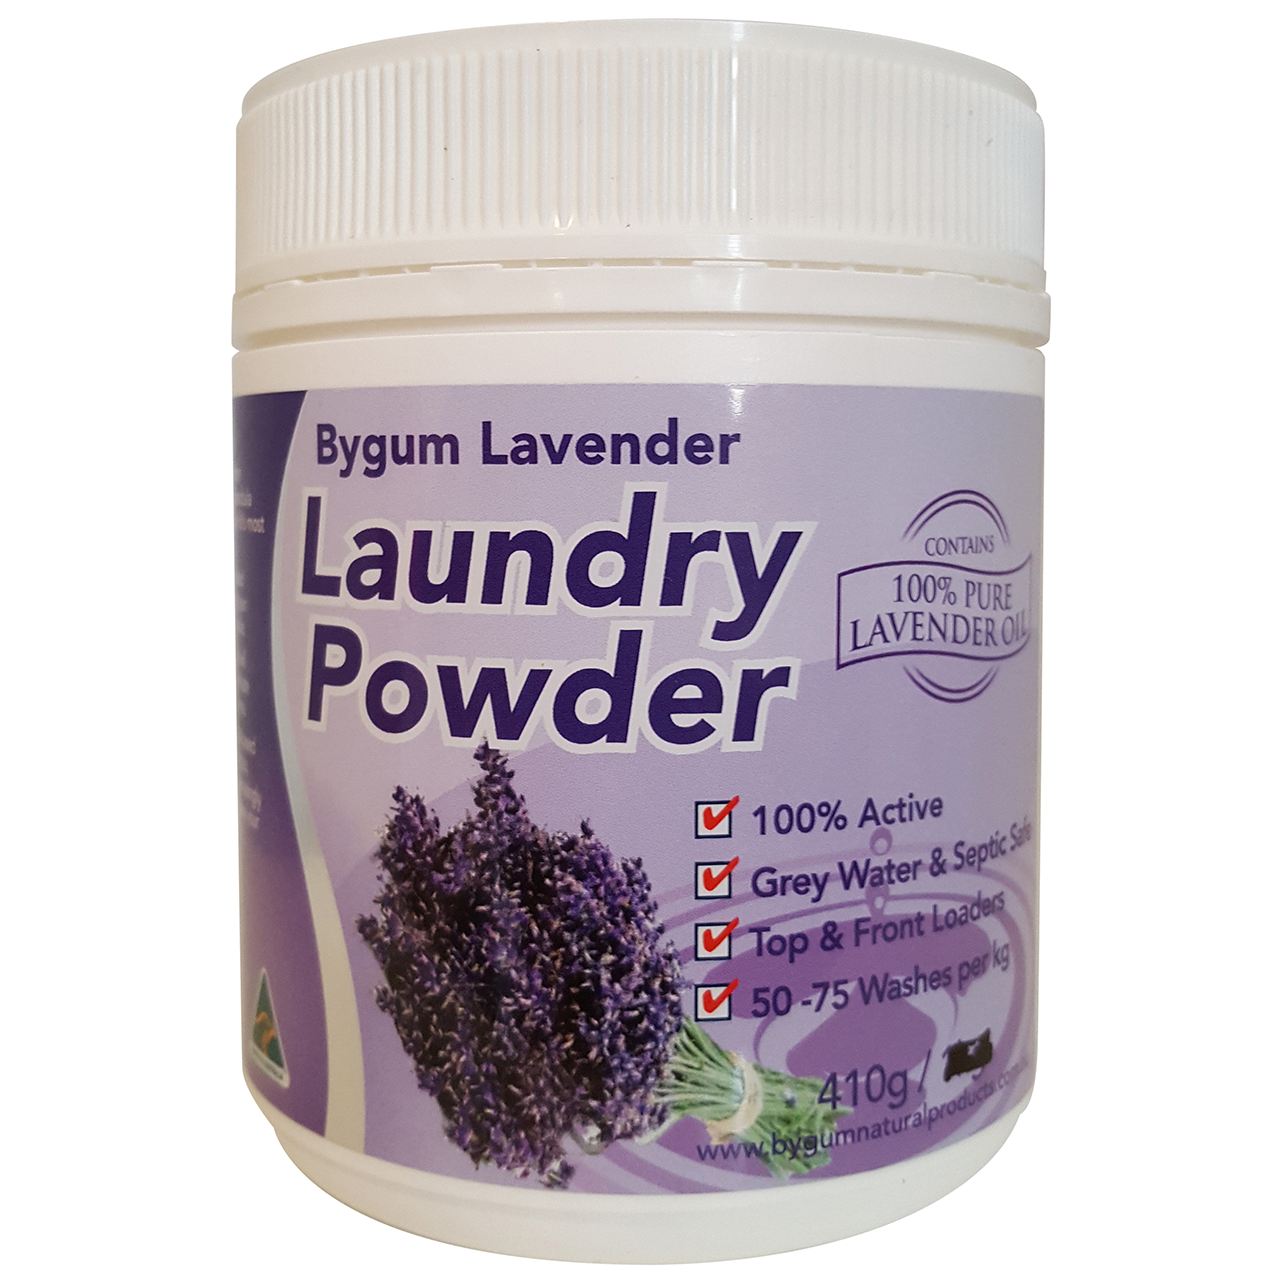 Bygum Lavender Laundry Powder 410g